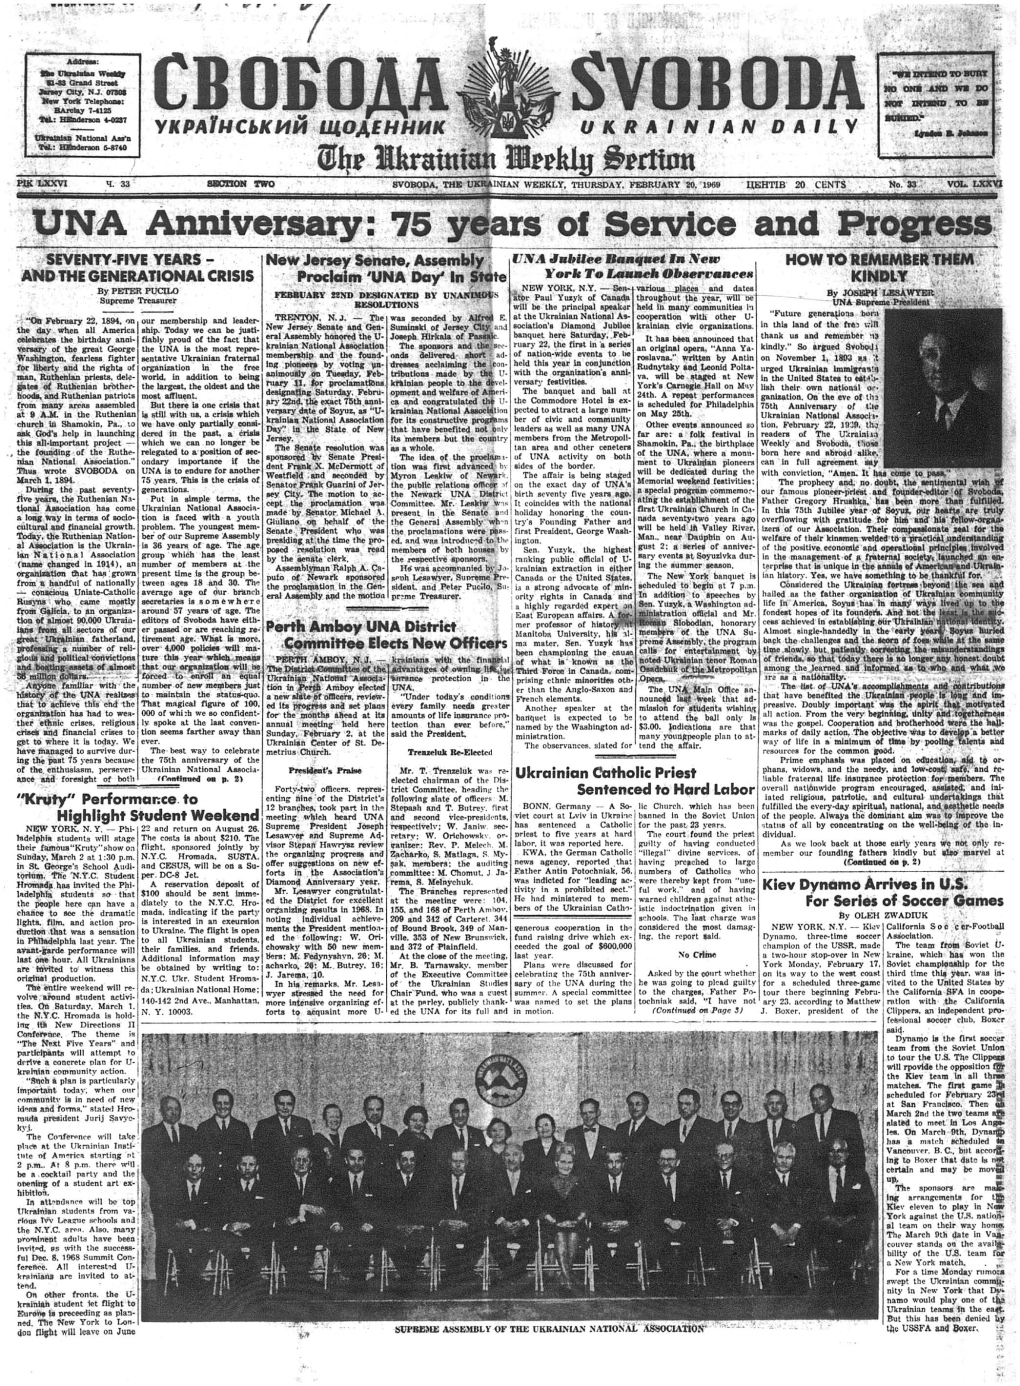 Anniversary: 75 Years of Service and Progress